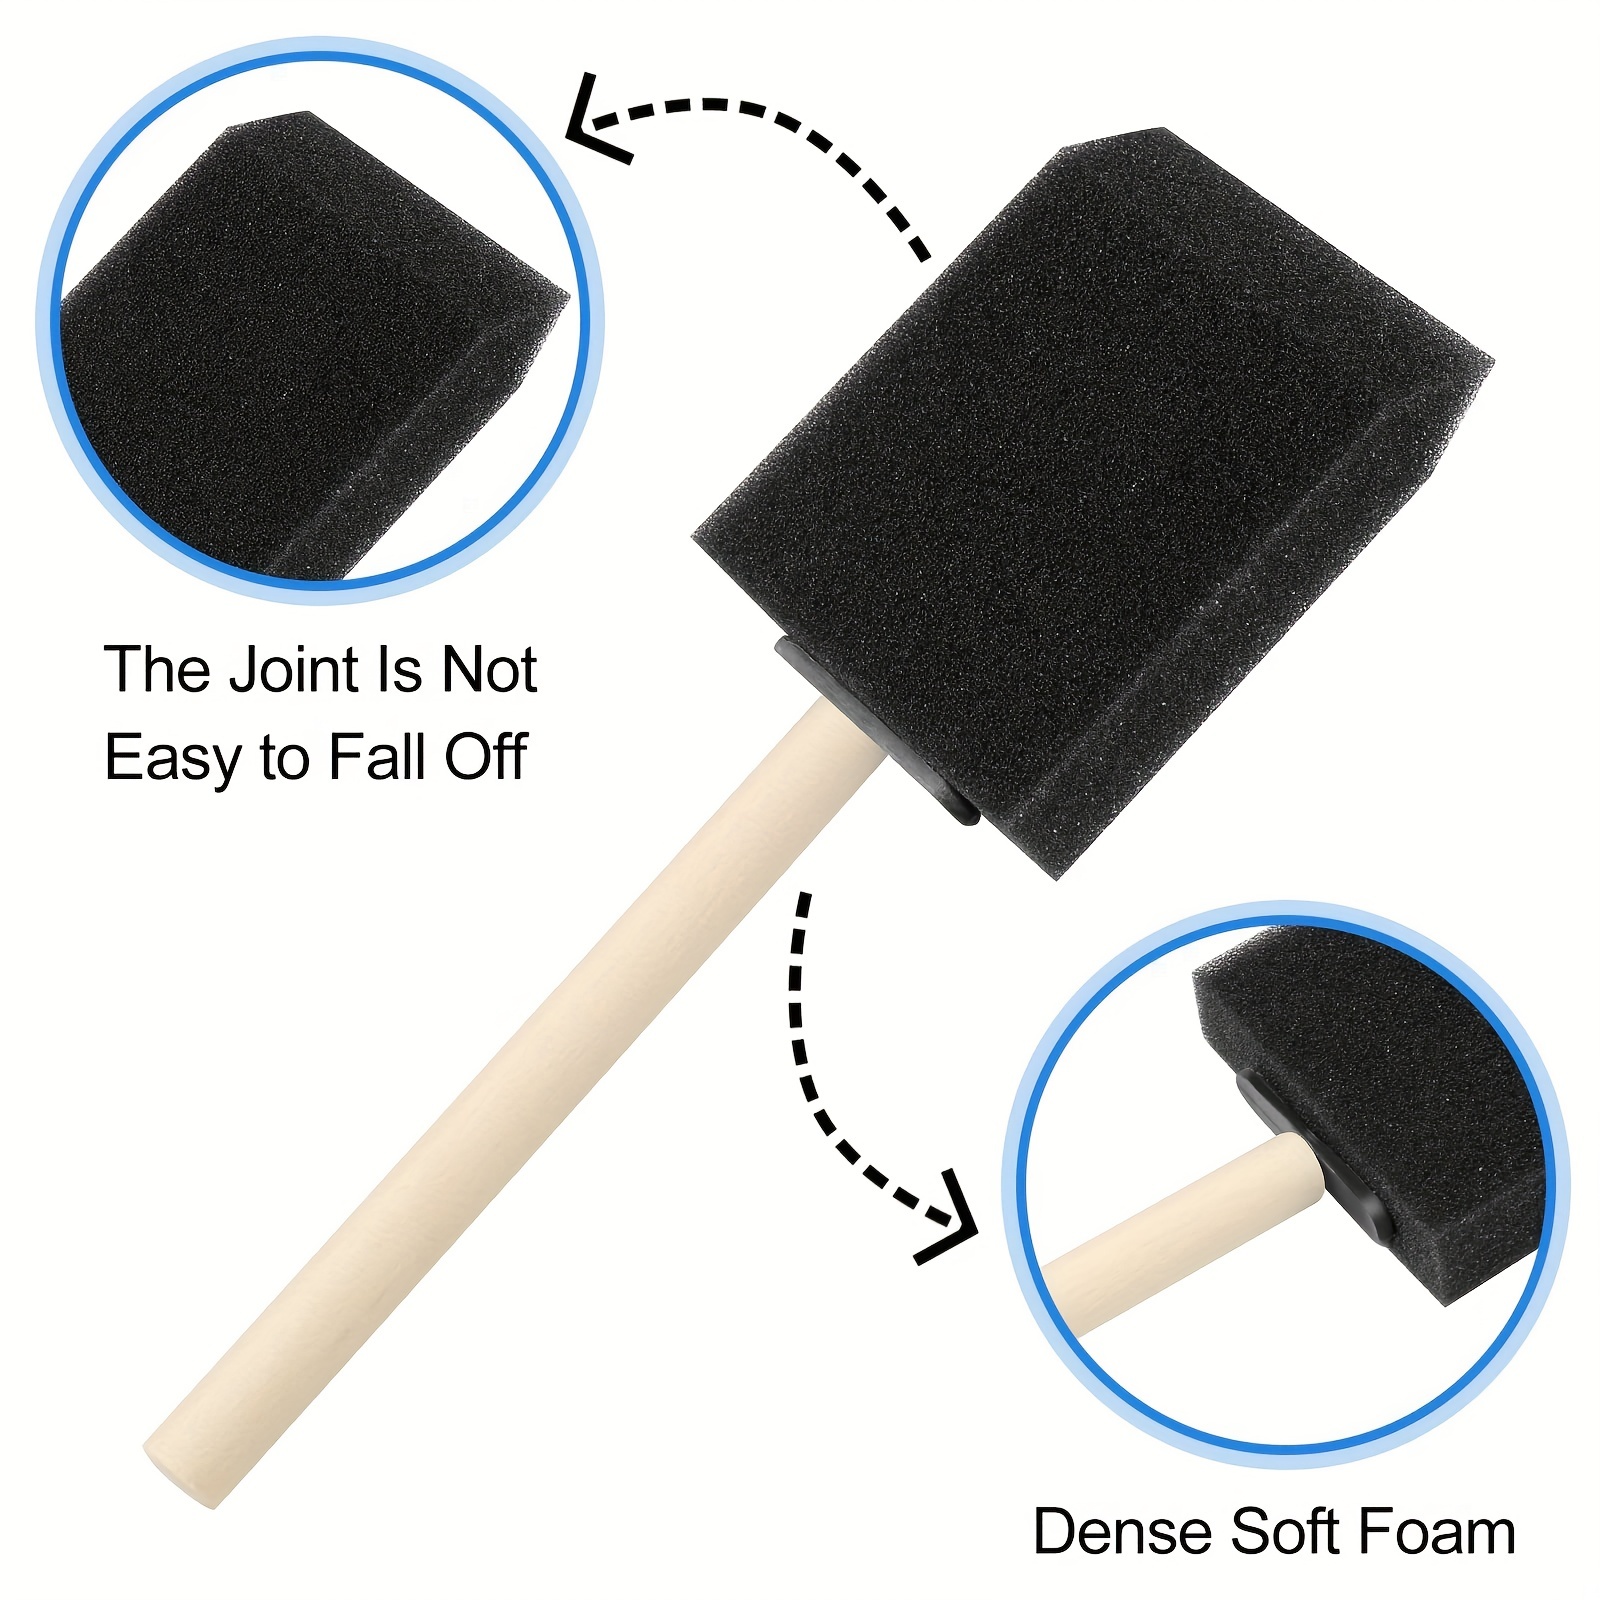 Foam Paint Brushes 4 Pcs Sponge Brushes Sponge Paint Brush with Wooden Handle Foam Brushes for Painting Foam Brushes for Staining Paint Sponges Foam